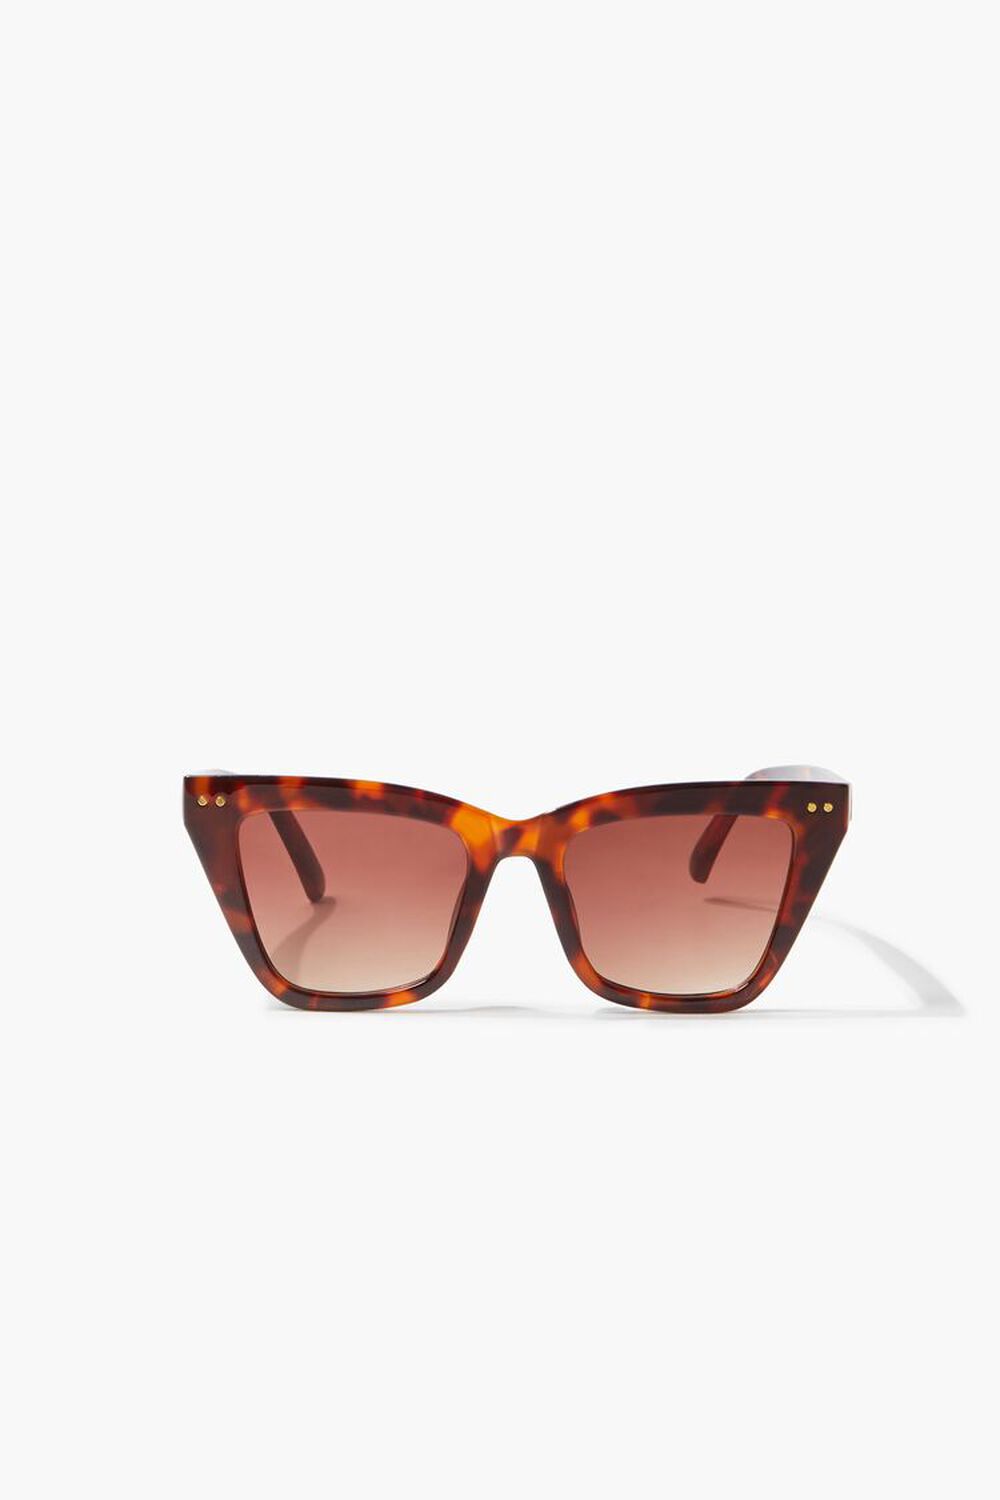 Tortoiseshell Square Sunglasses, image 1